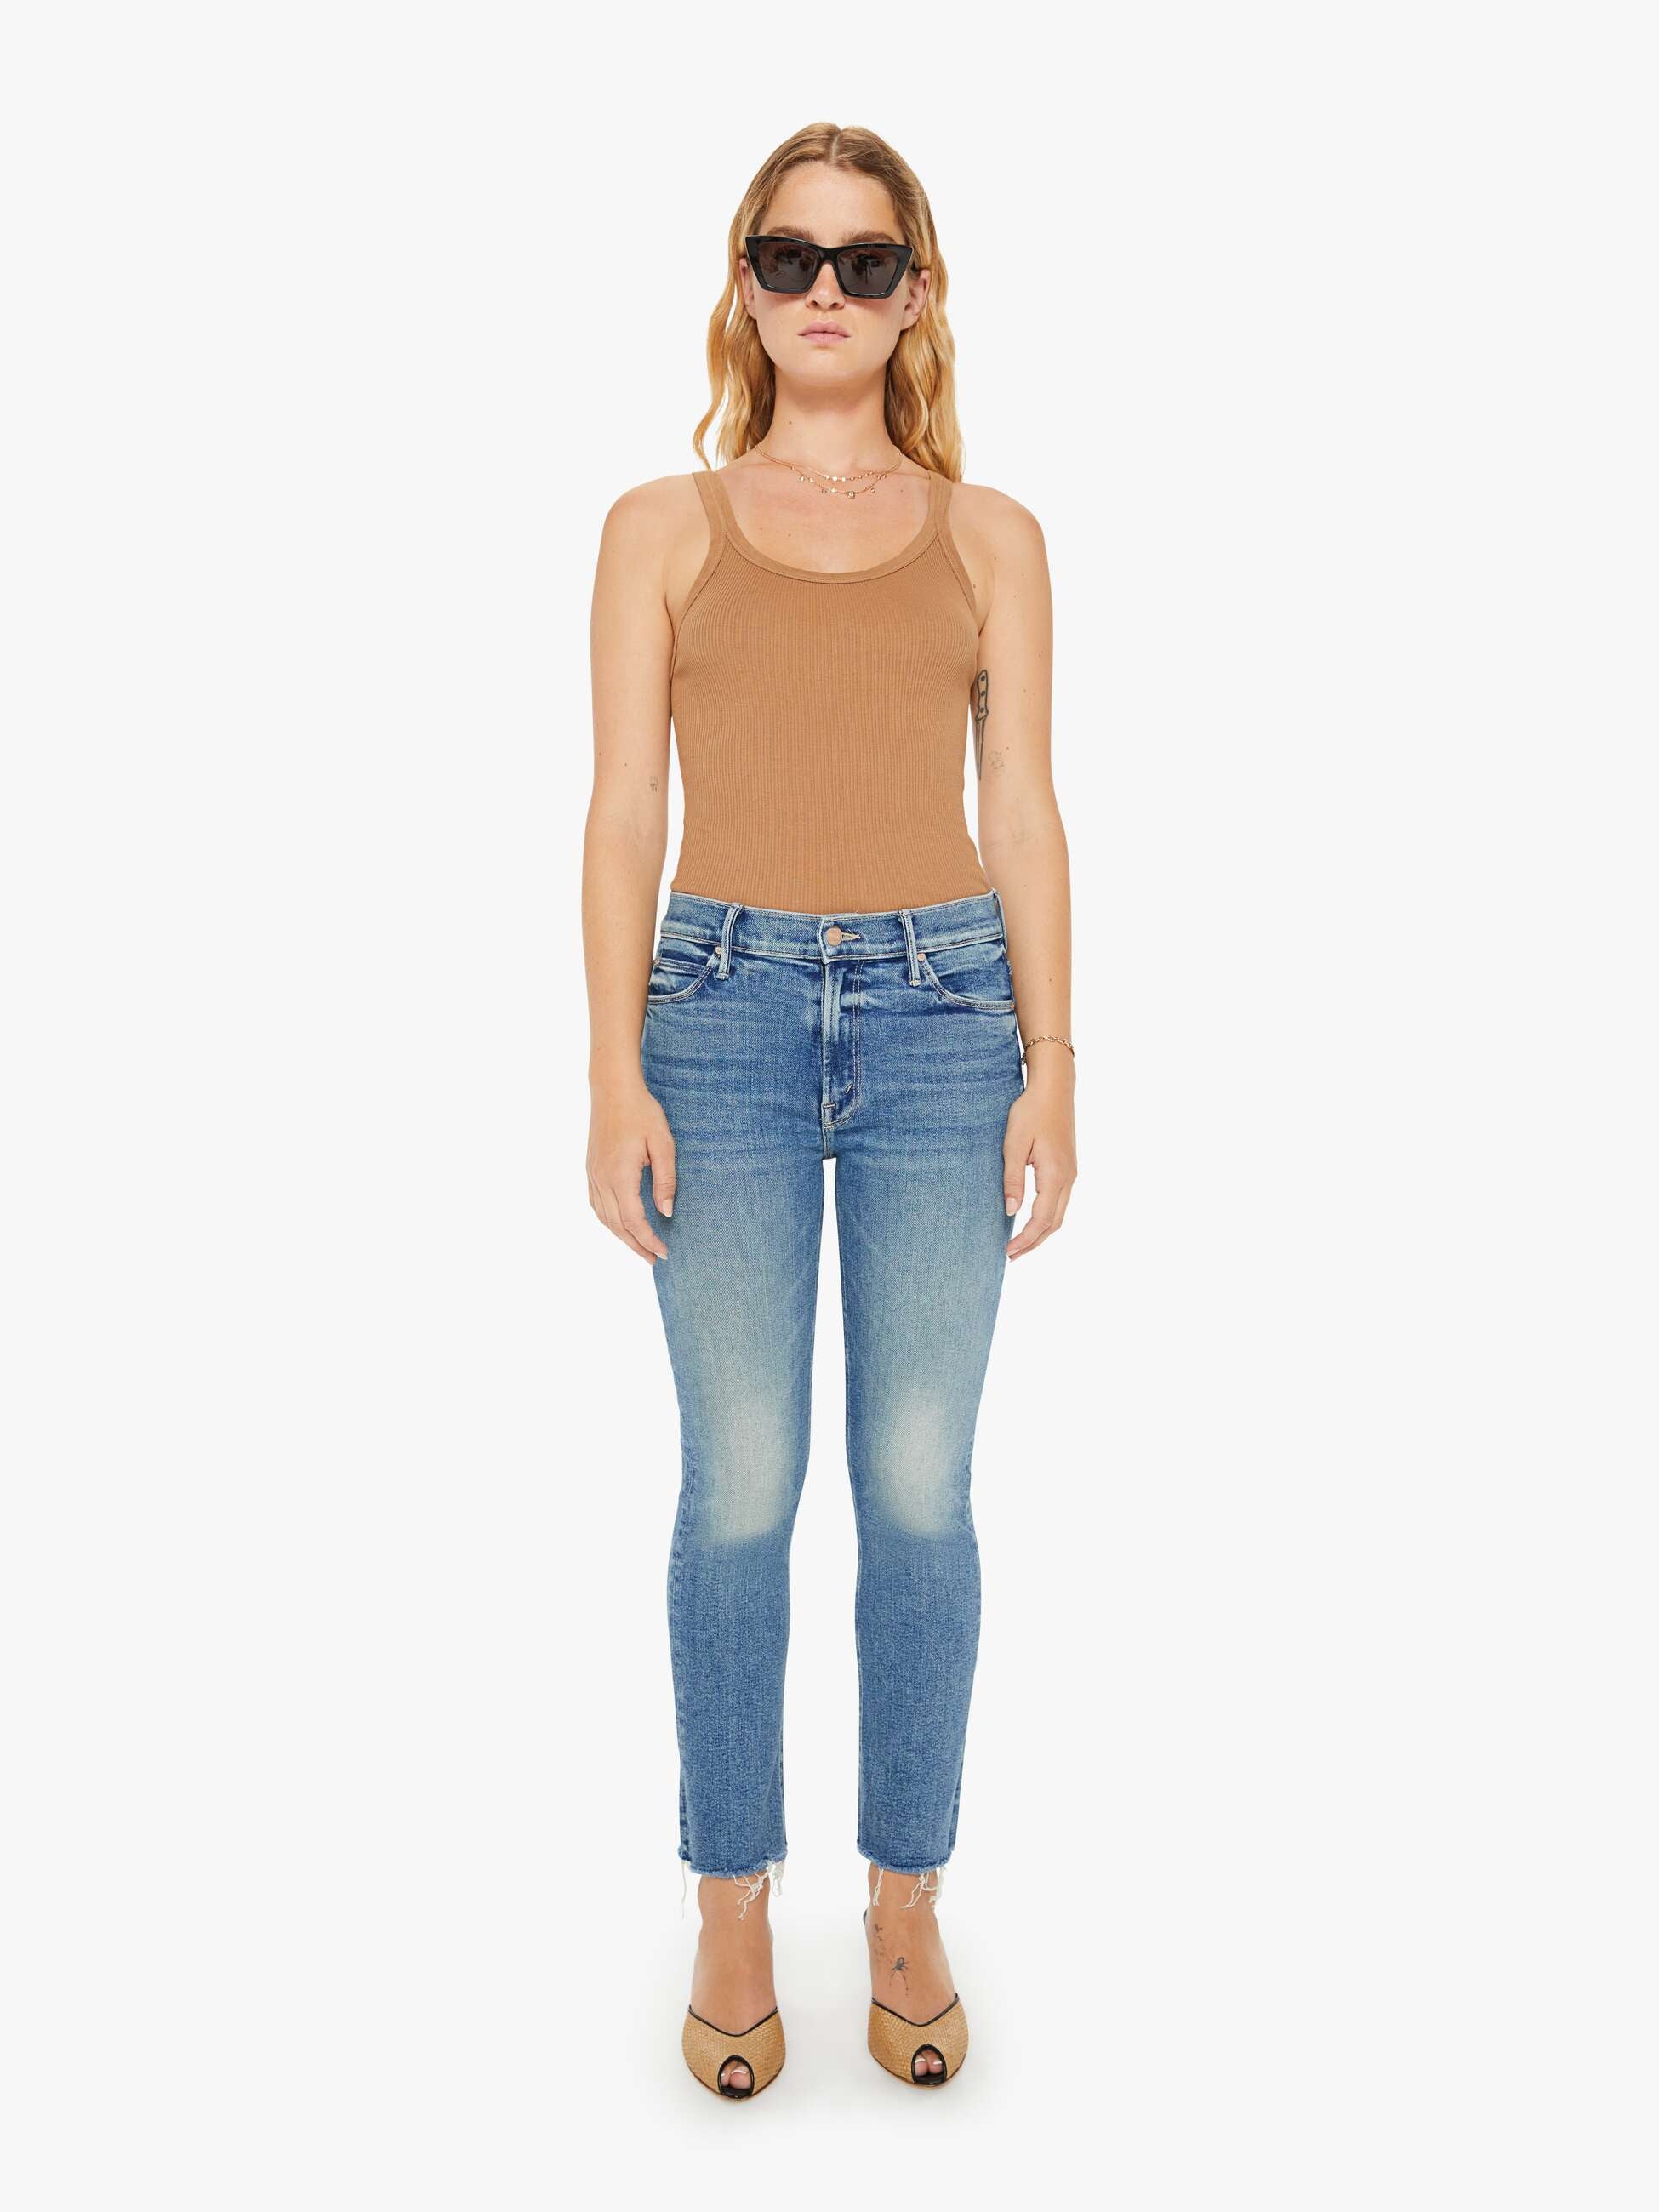 Top 204+ buy womens jeans online